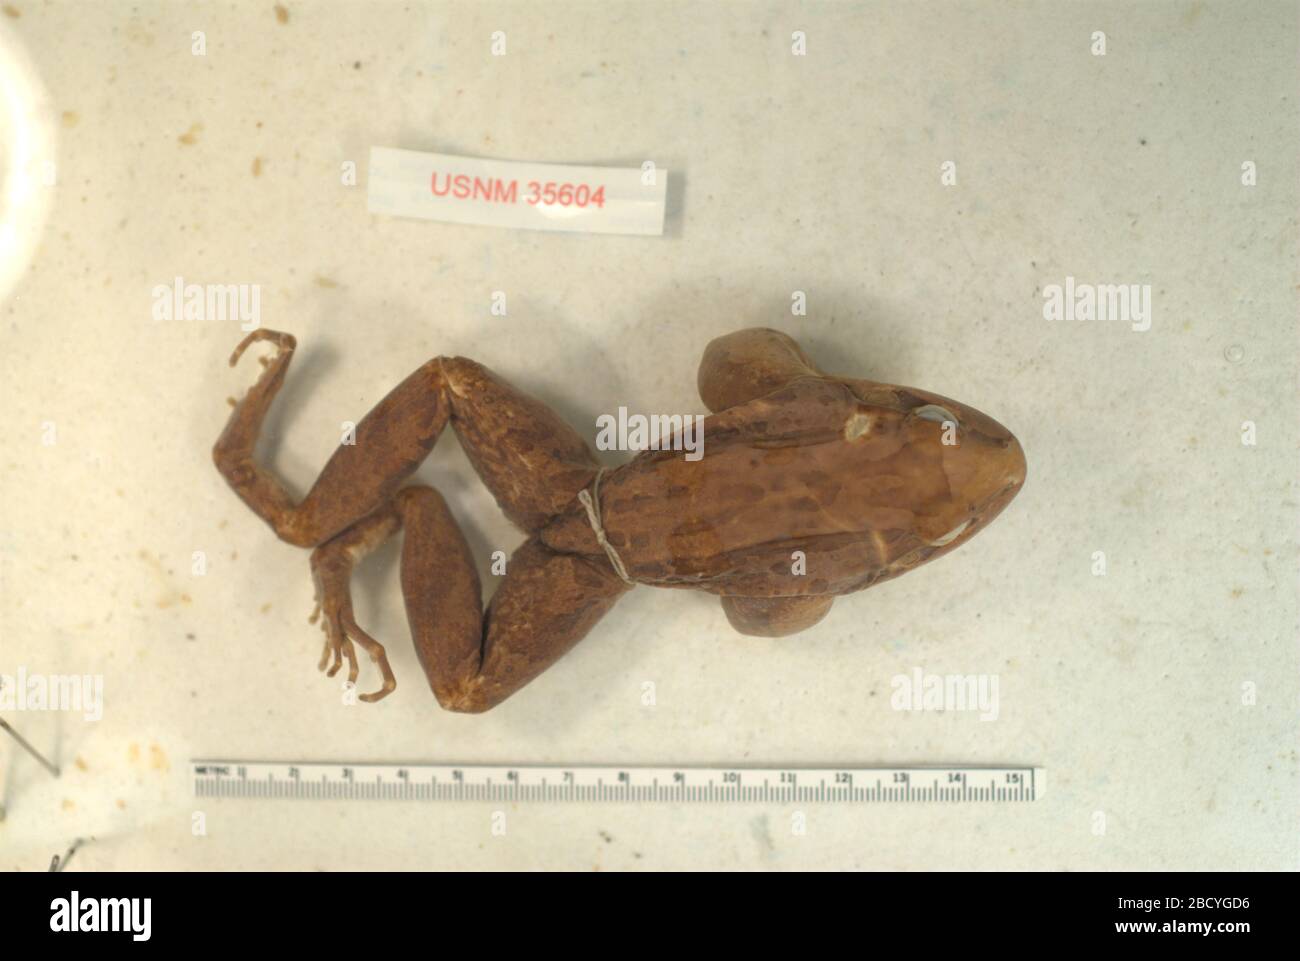 Leptodactylus insularum. 2 Oct 20181 Leptodactylus insularum Stock Photo